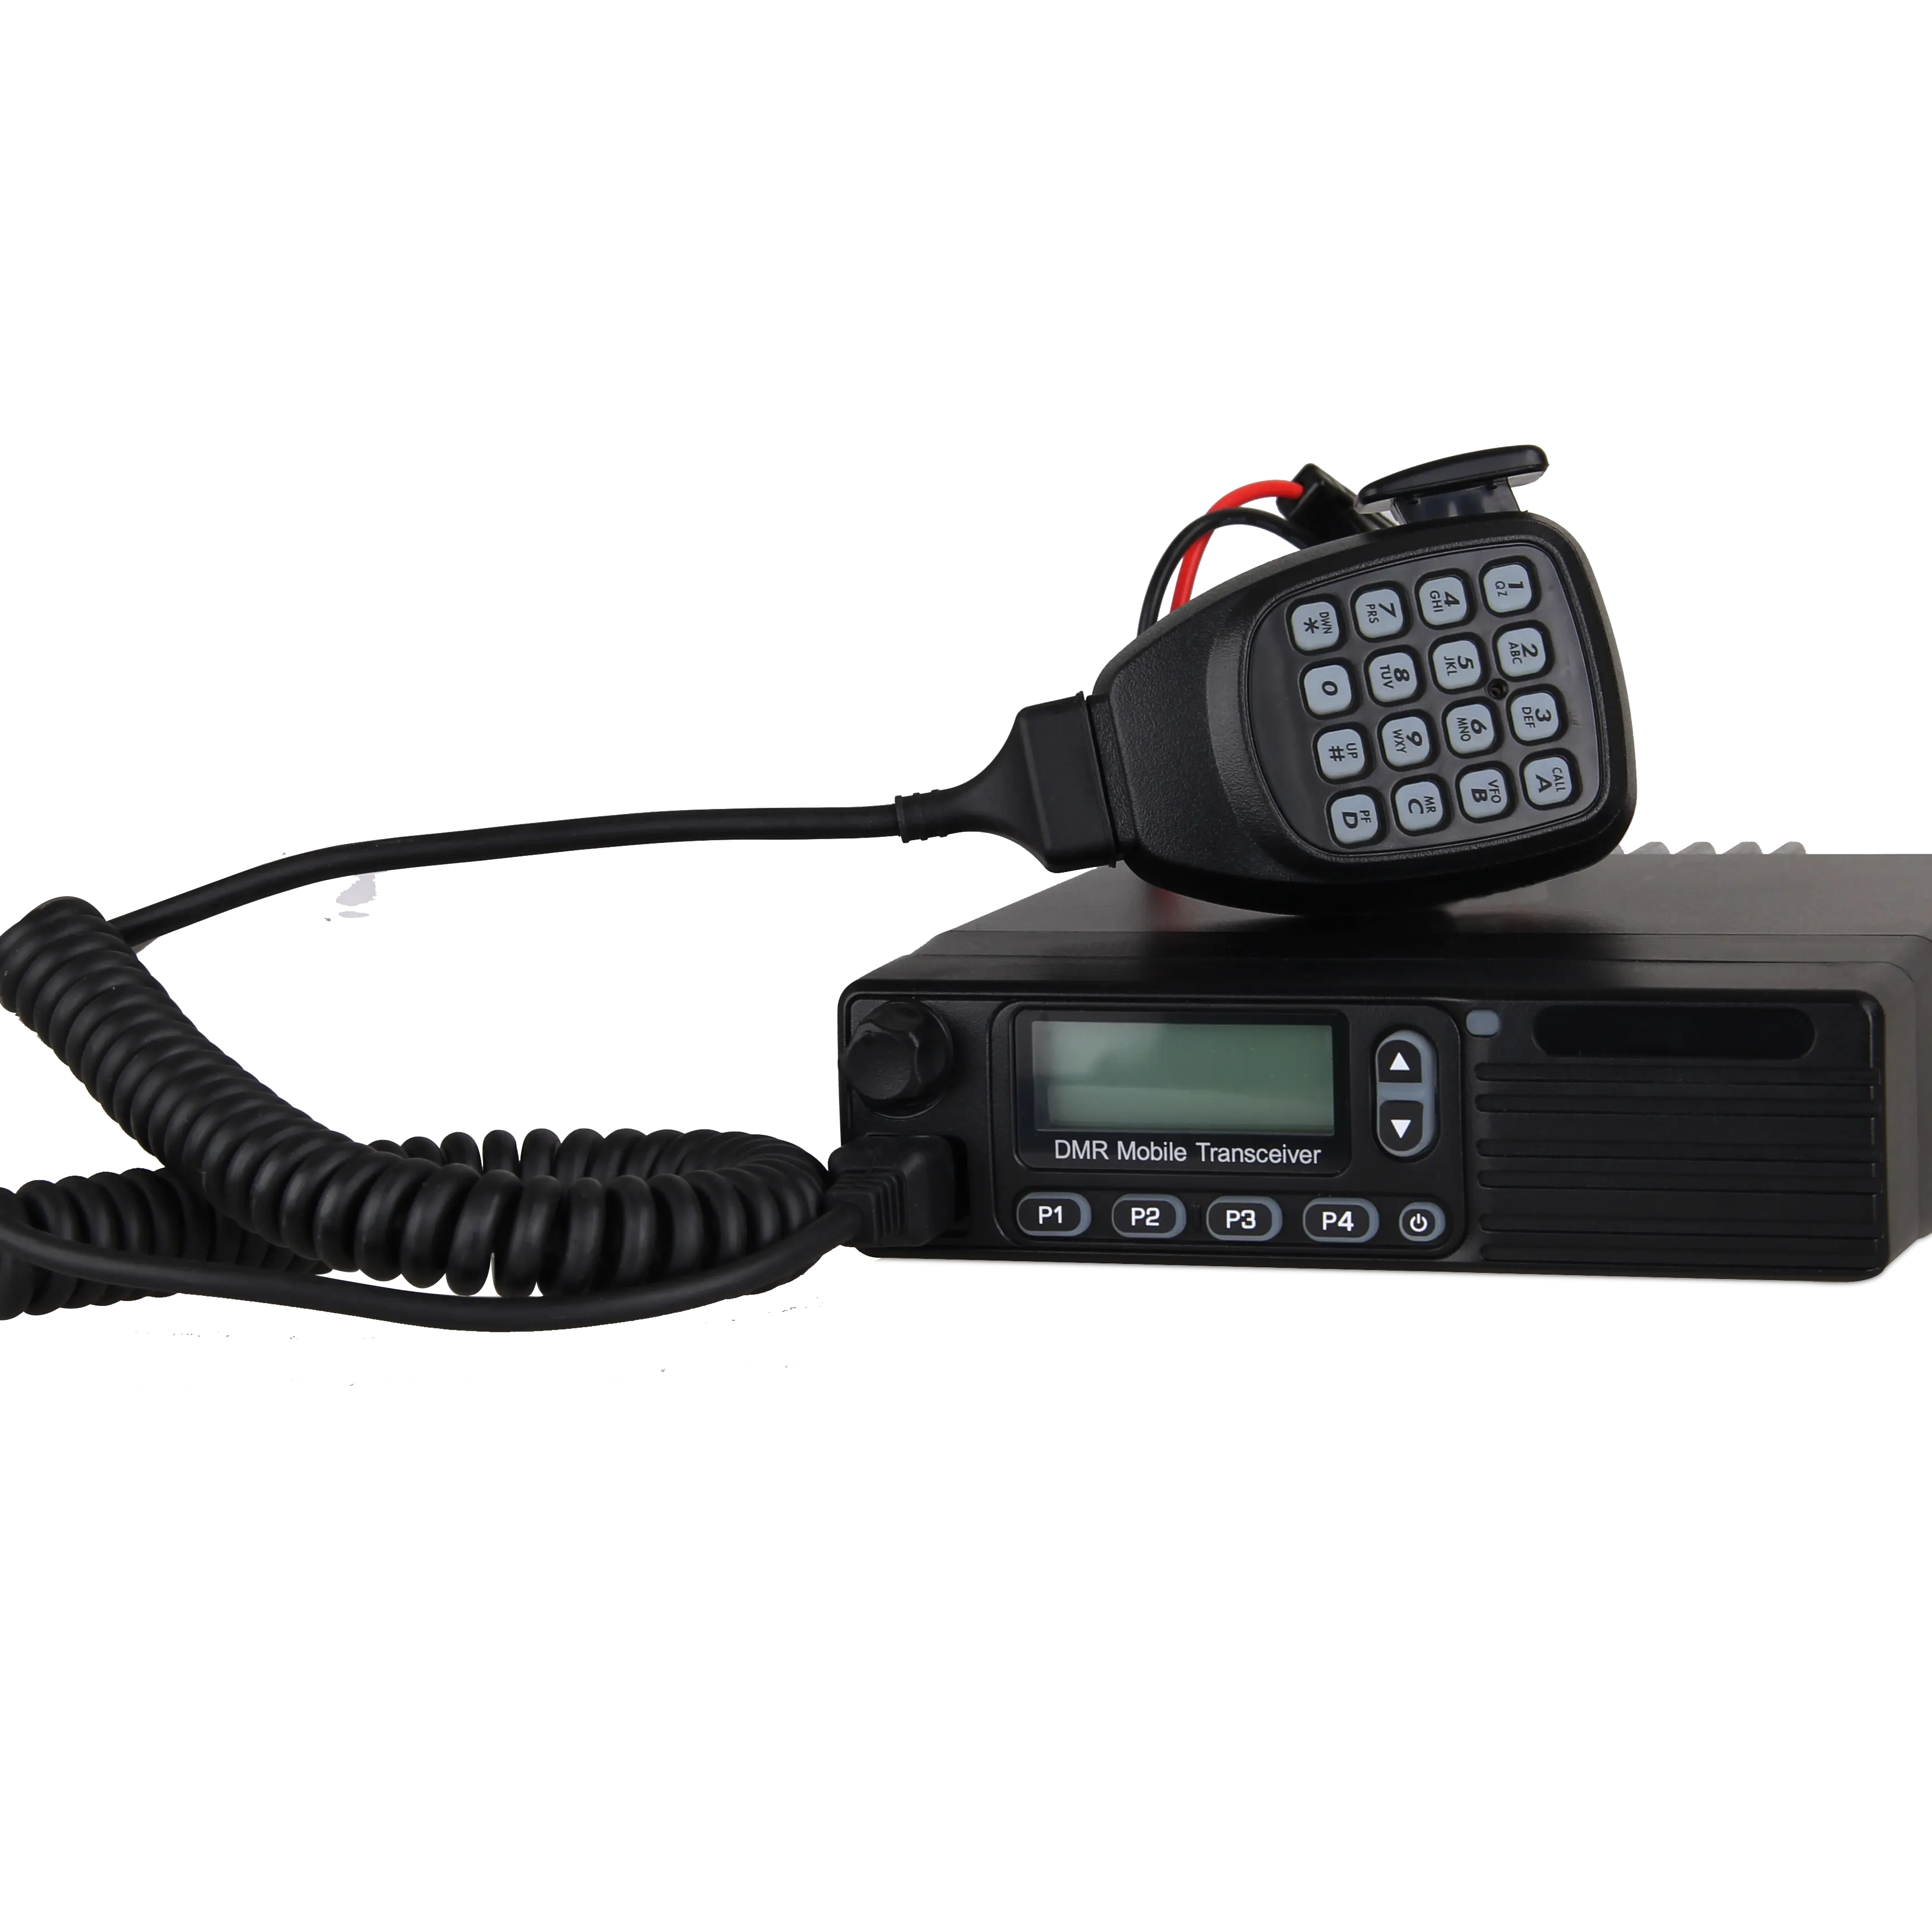 DMR digitales Mobilfunk gerät VHF/UHF KST DM-M8000 Amateurfunk kann mit Repeater arbeiten